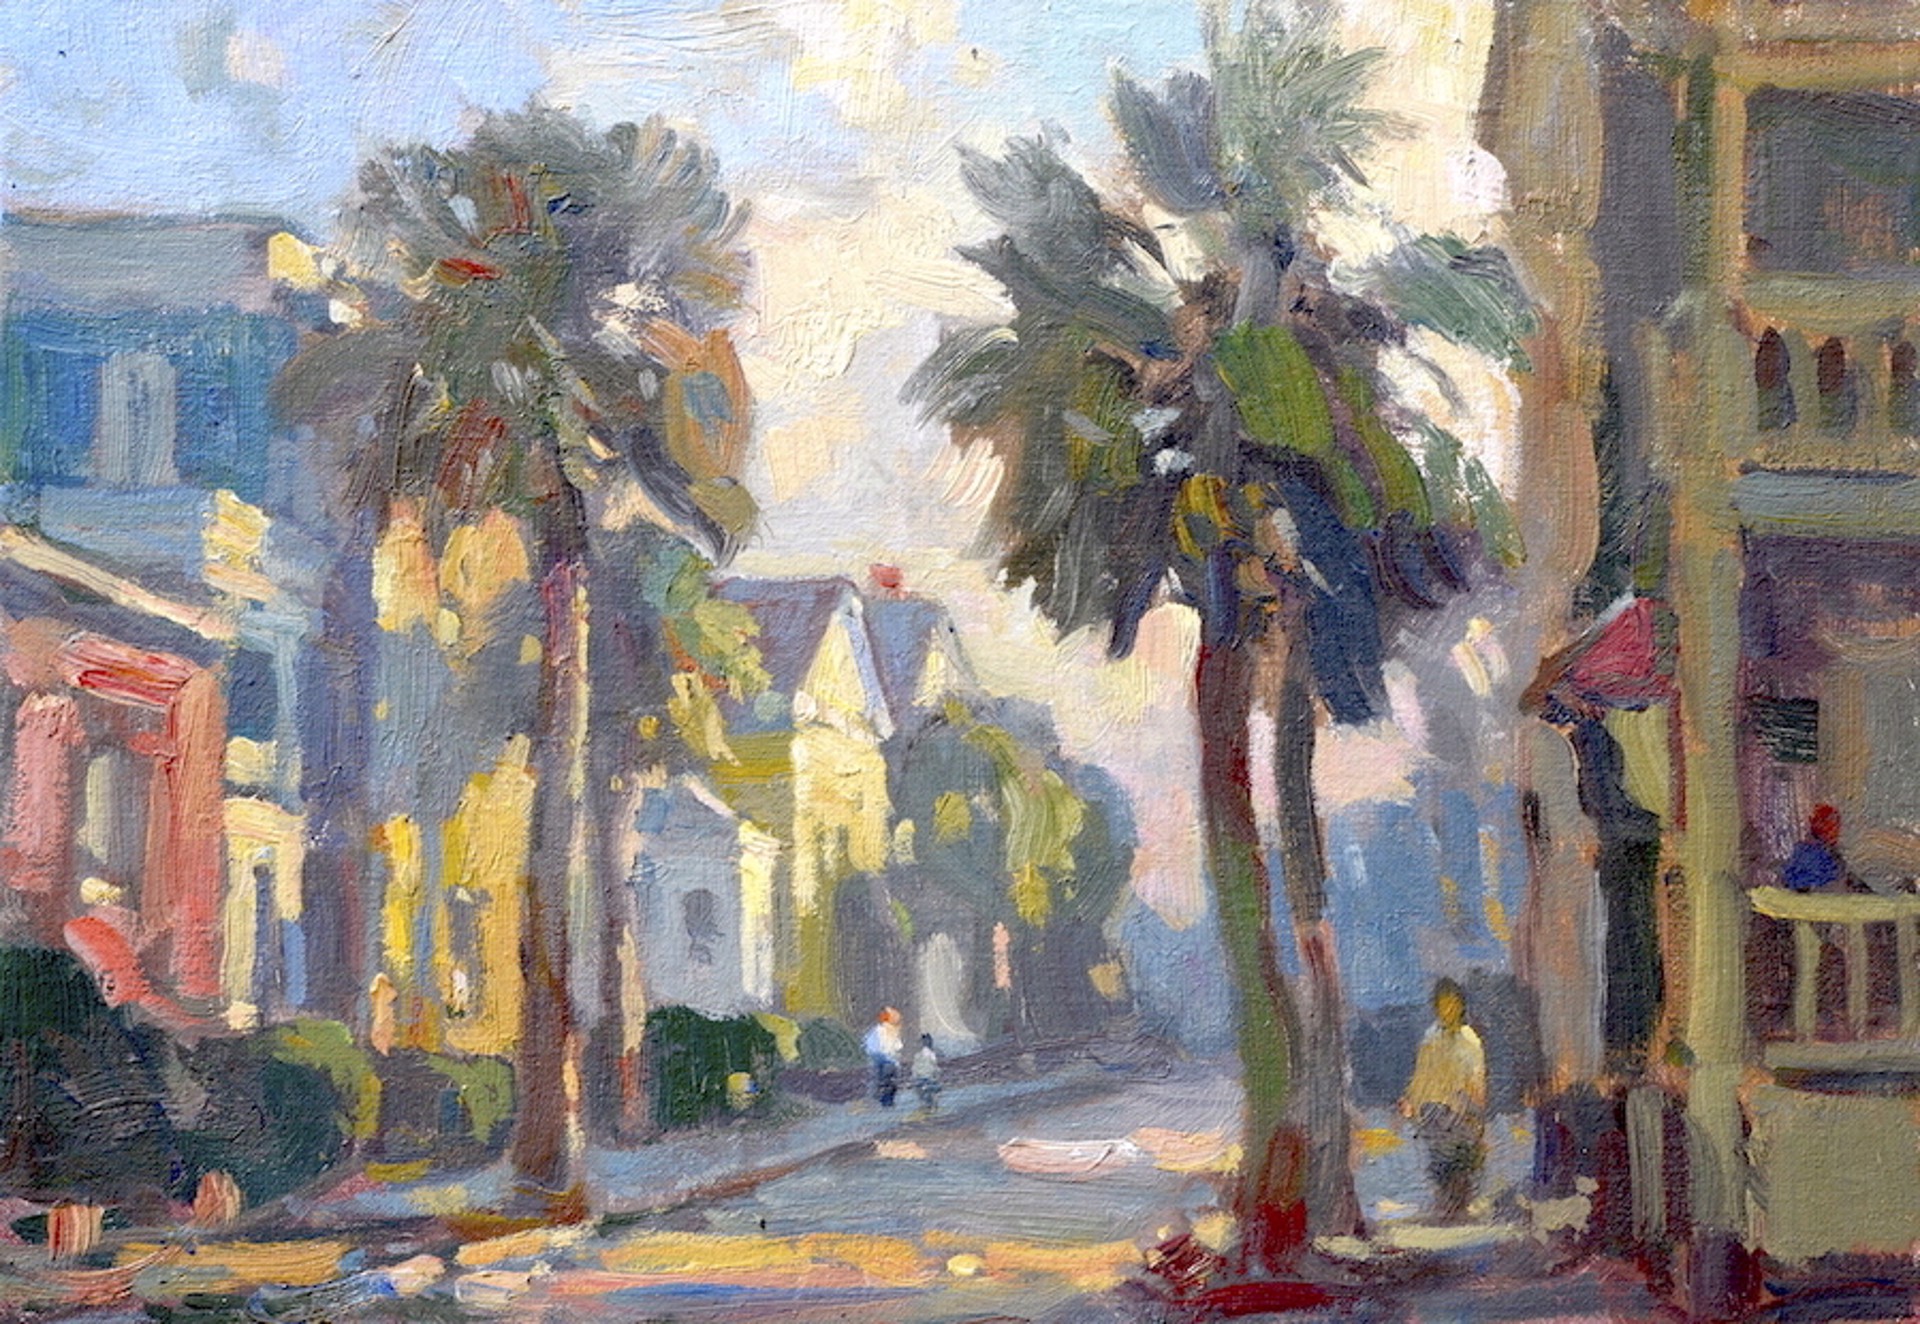 Sunny Morning, Queen Street by John C. Traynor